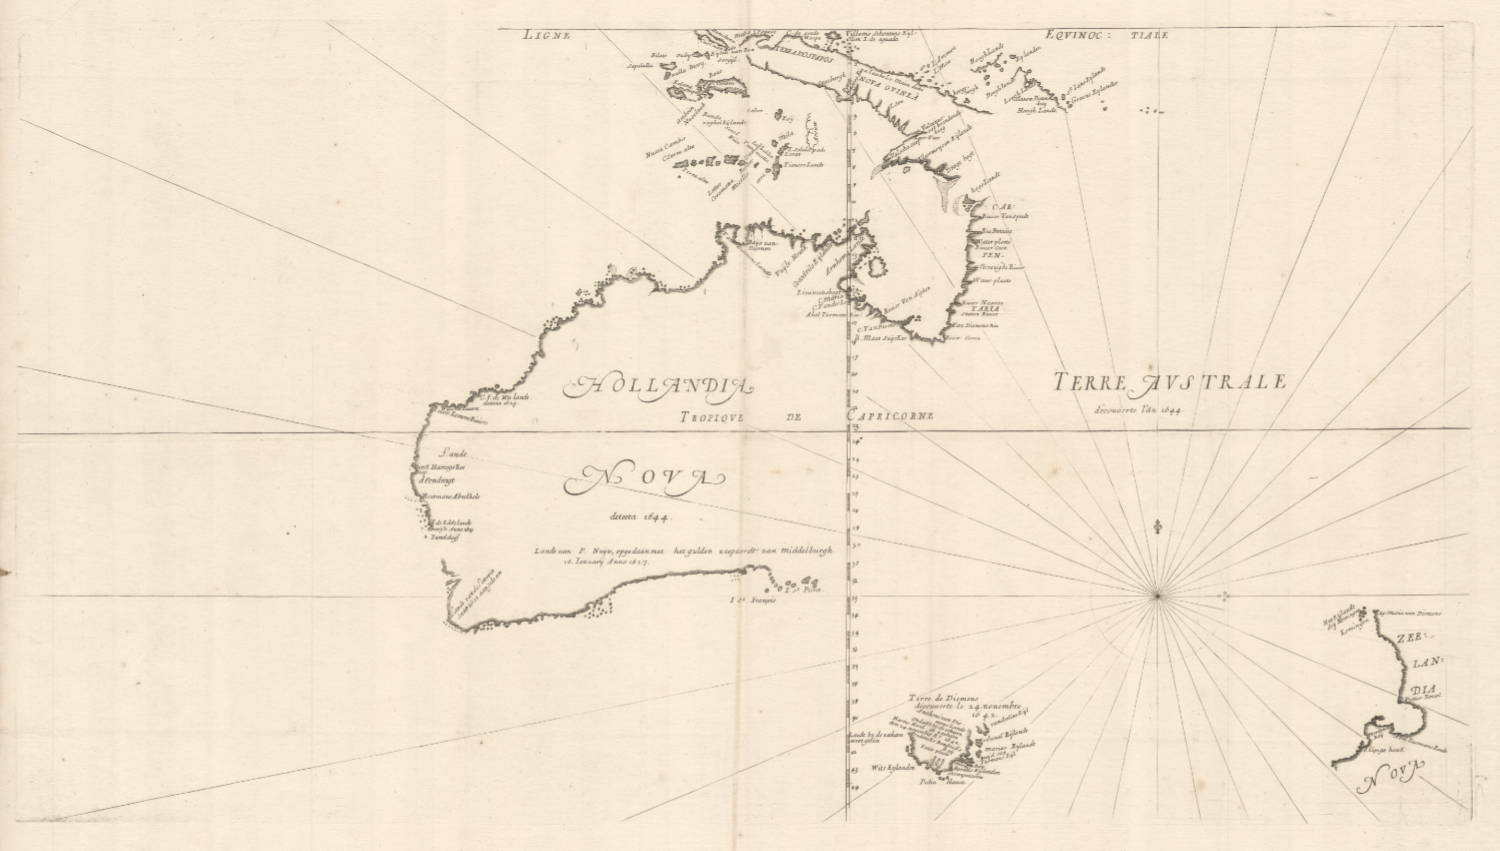 Antique map of Australia by Thévenot